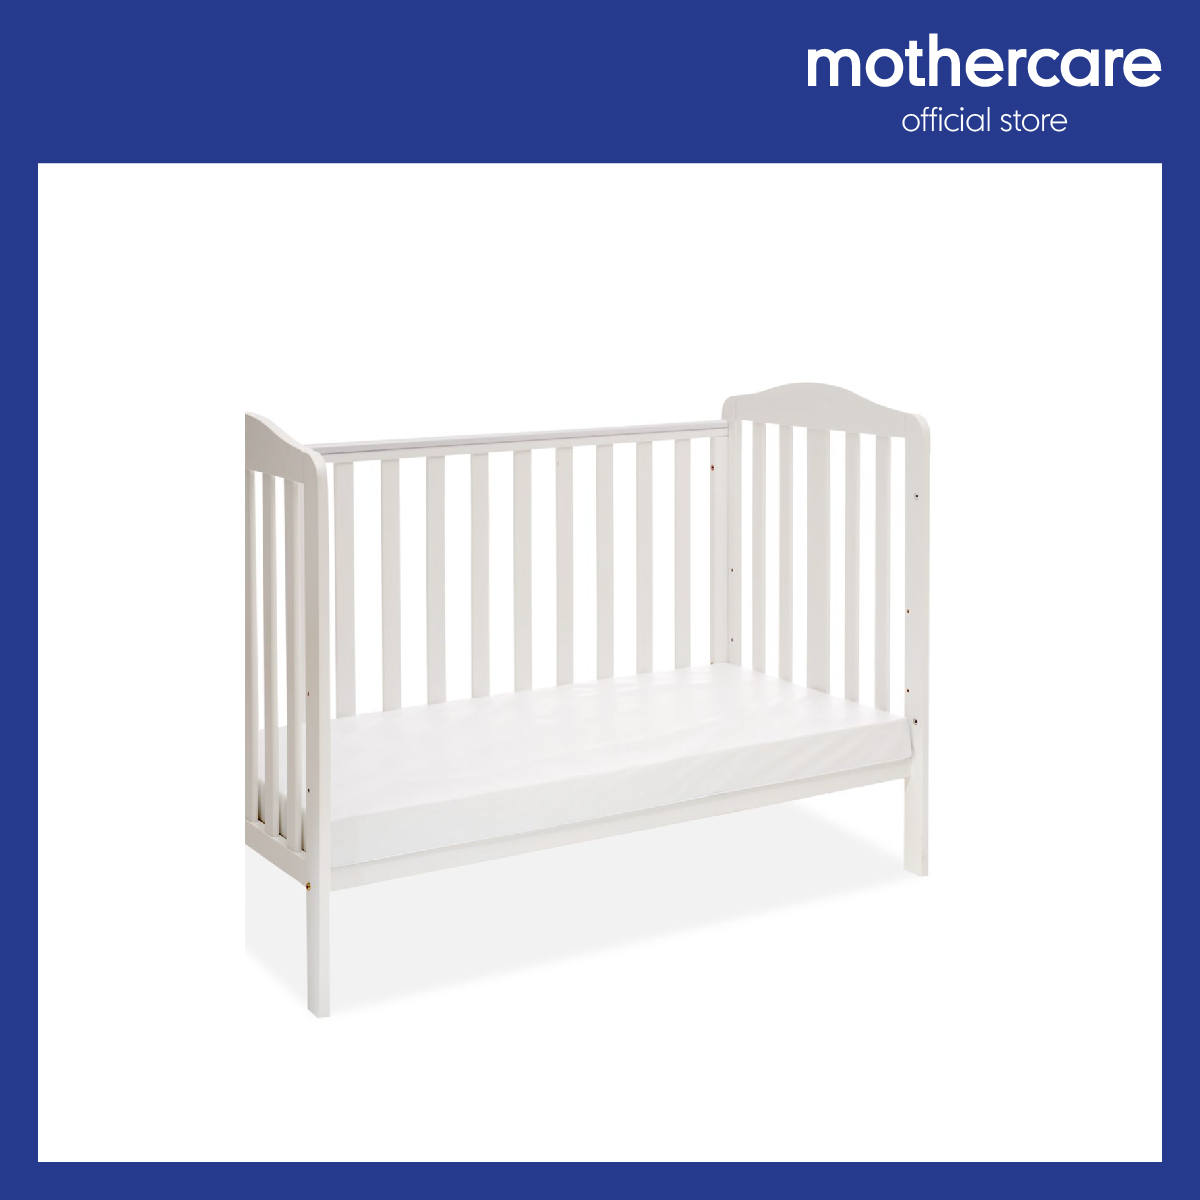 mothercare essential foam cot bed mattress